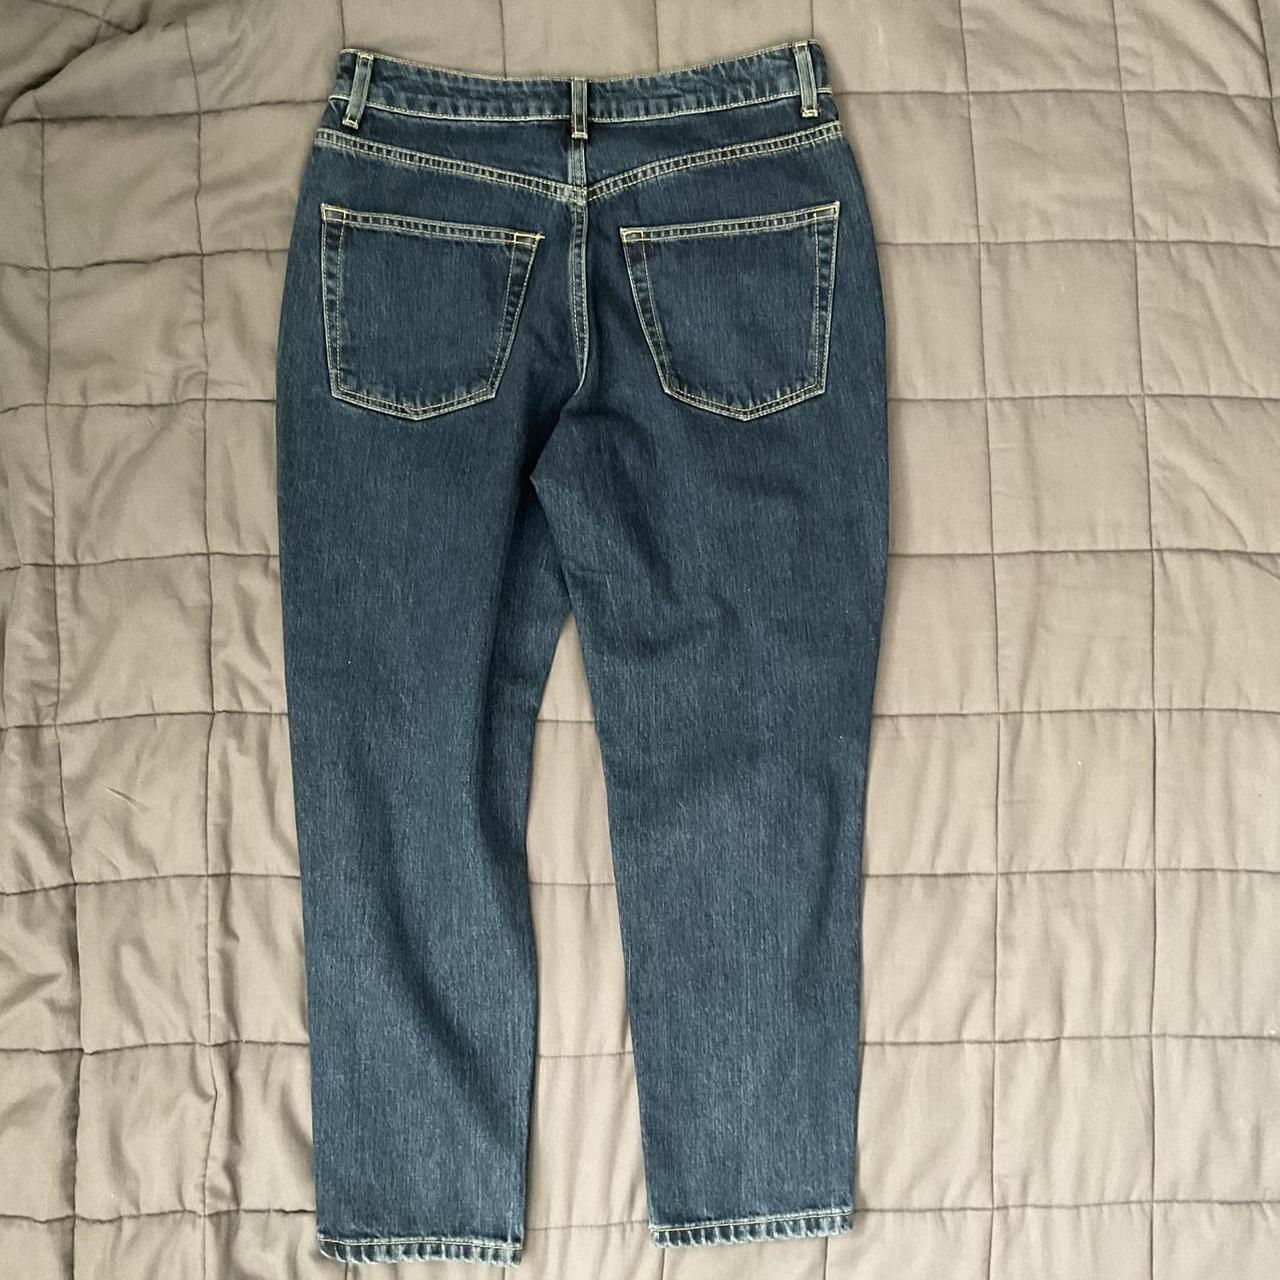 Topshop moto petite mom jeans in a medium dark wash - Depop